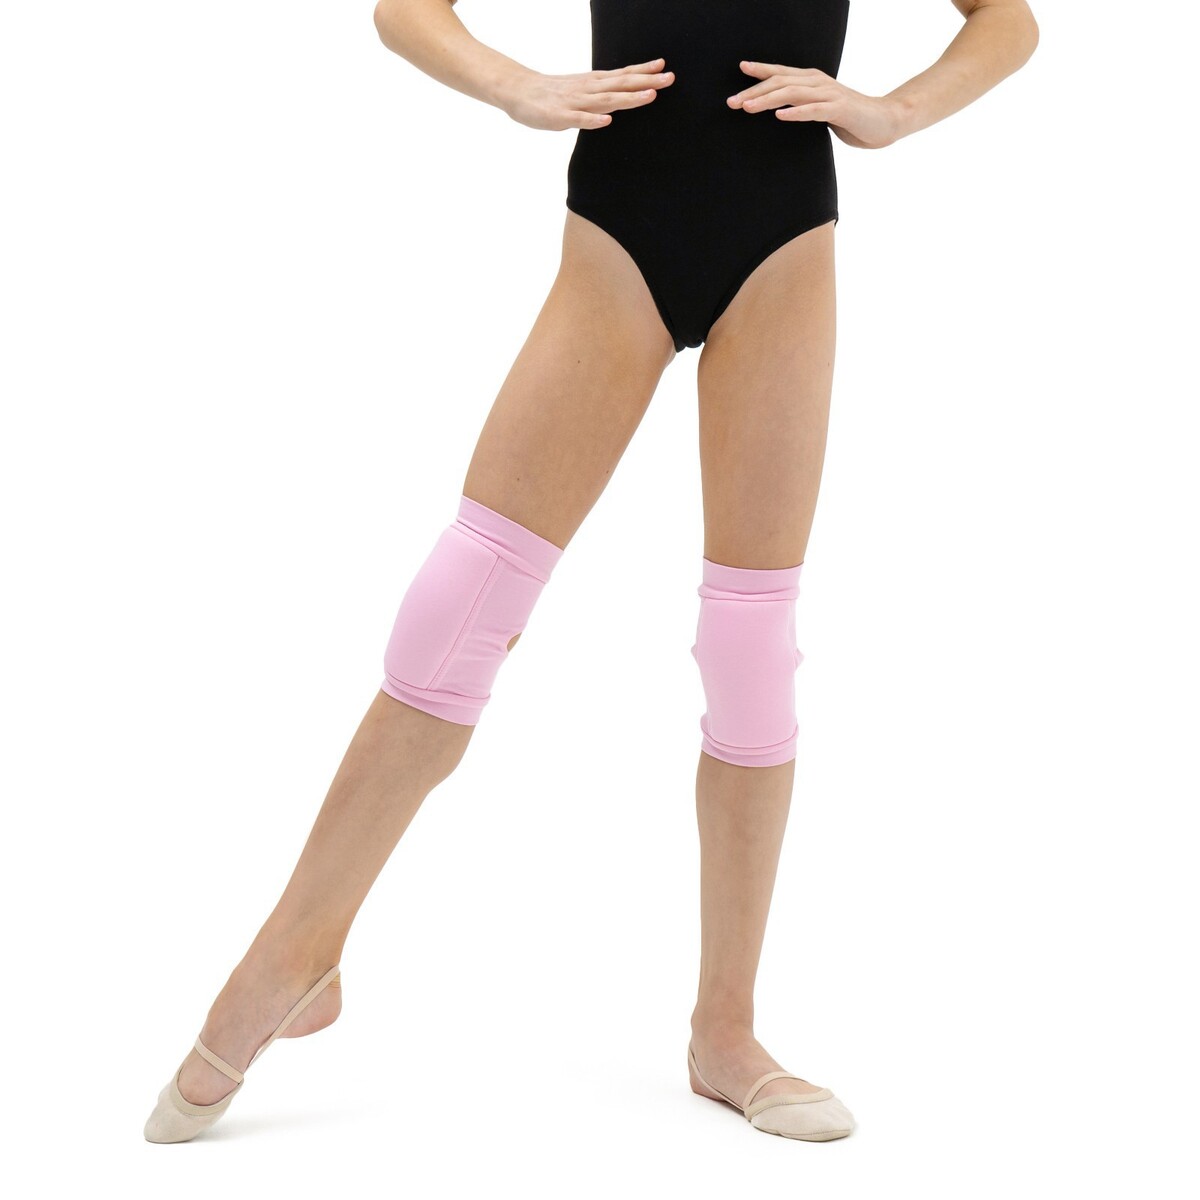 фото Наколенники для гимнастики и танцев grace dance, с уплотнителем, р. l, от 15 лет, цвет розовый